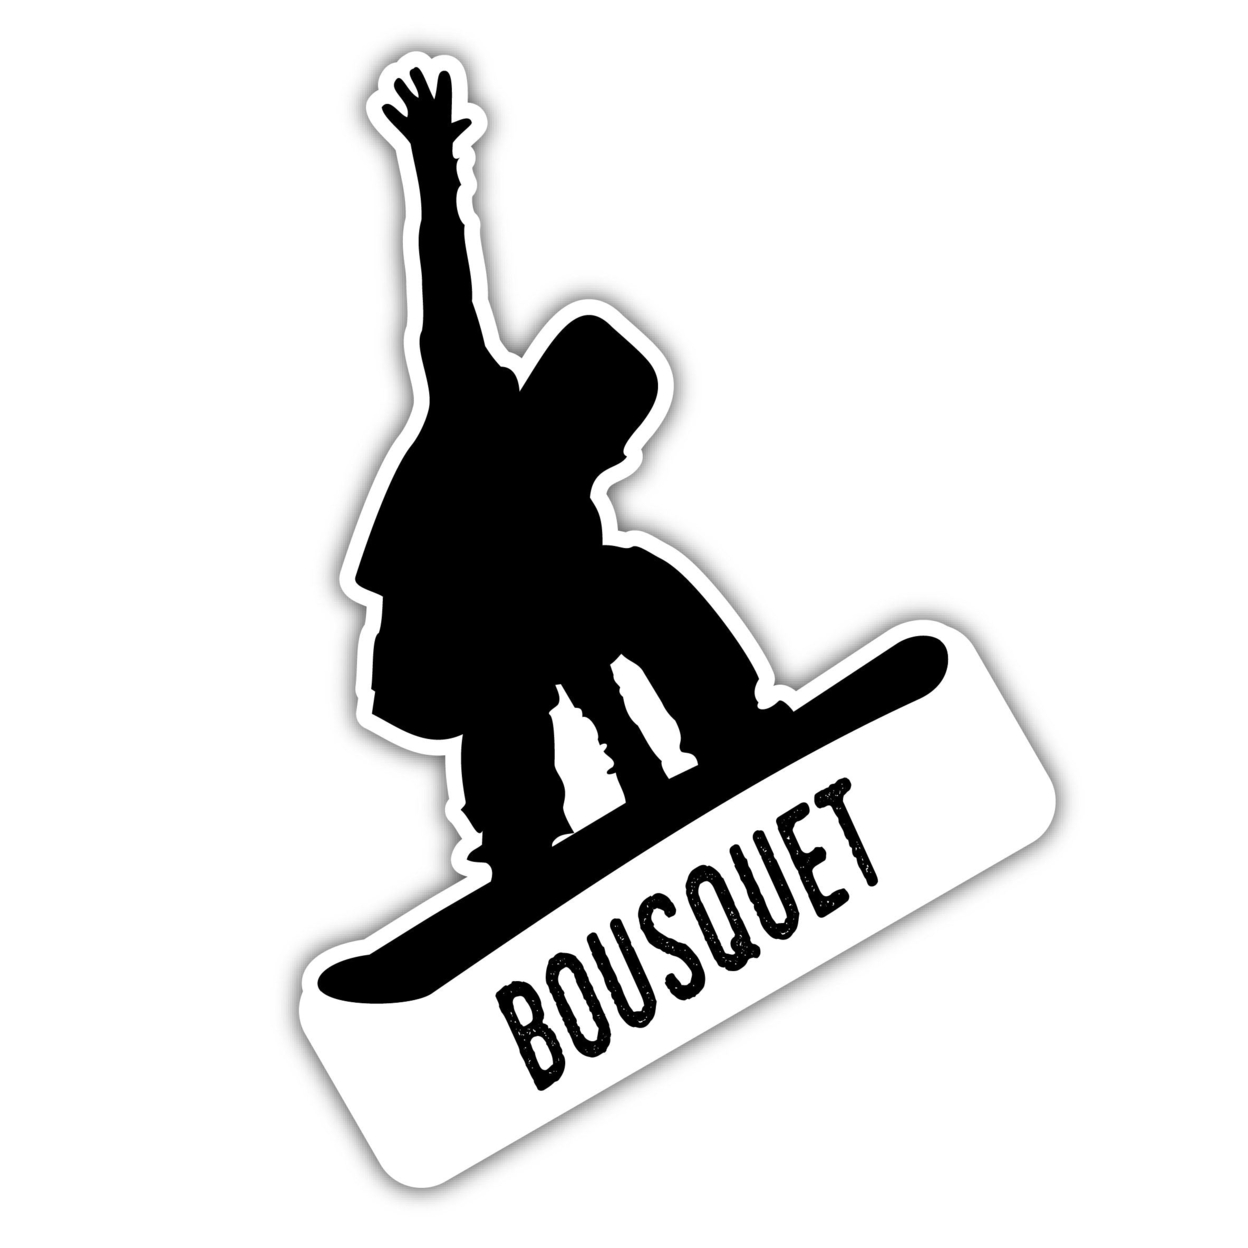 Bousquet Massachusetts Ski Adventures Souvenir 4 Inch Vinyl Decal Sticker Board Design